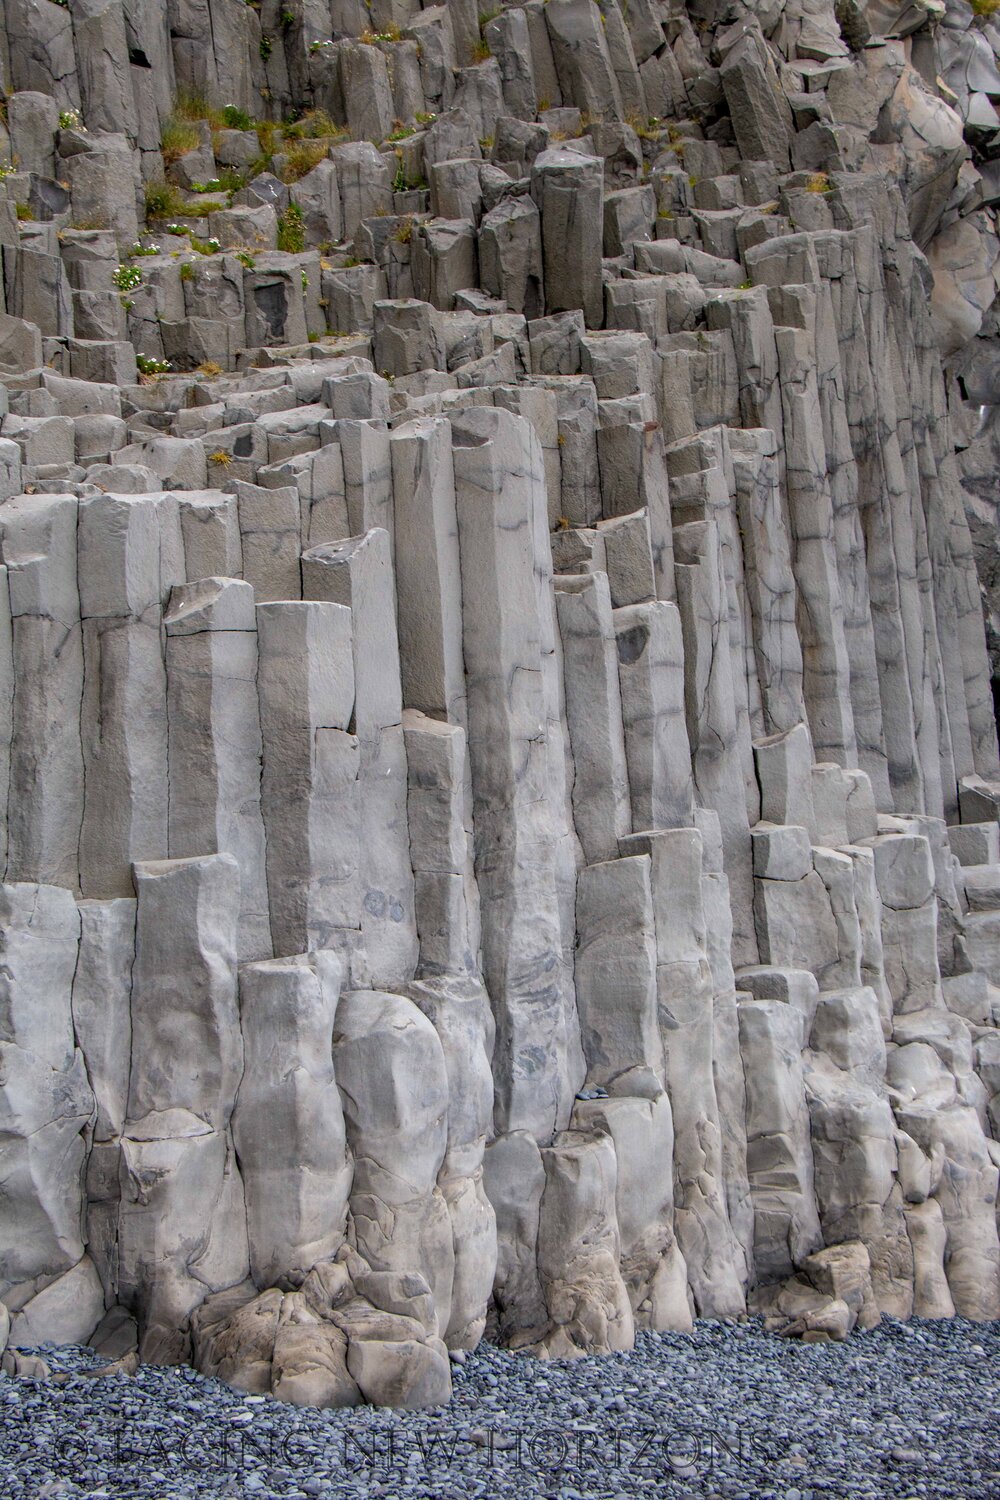  Towering columns of basalt 